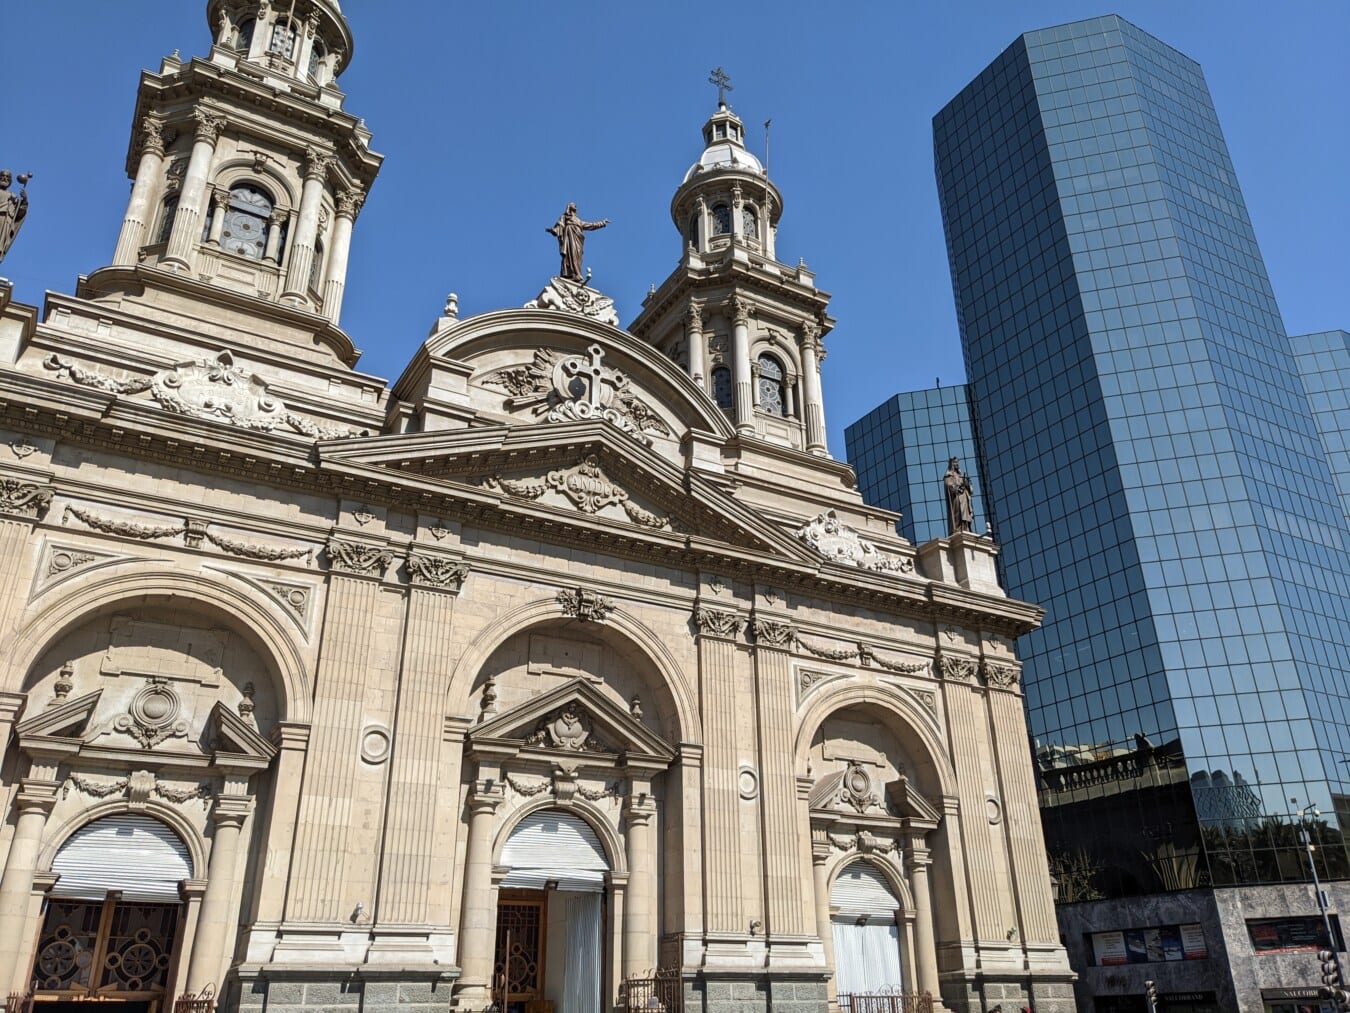 Metropolitan Cathedral, Plaza de Armas, square, Chile, cathedral, downtown, tower, landmark, baroque, facade, architecture